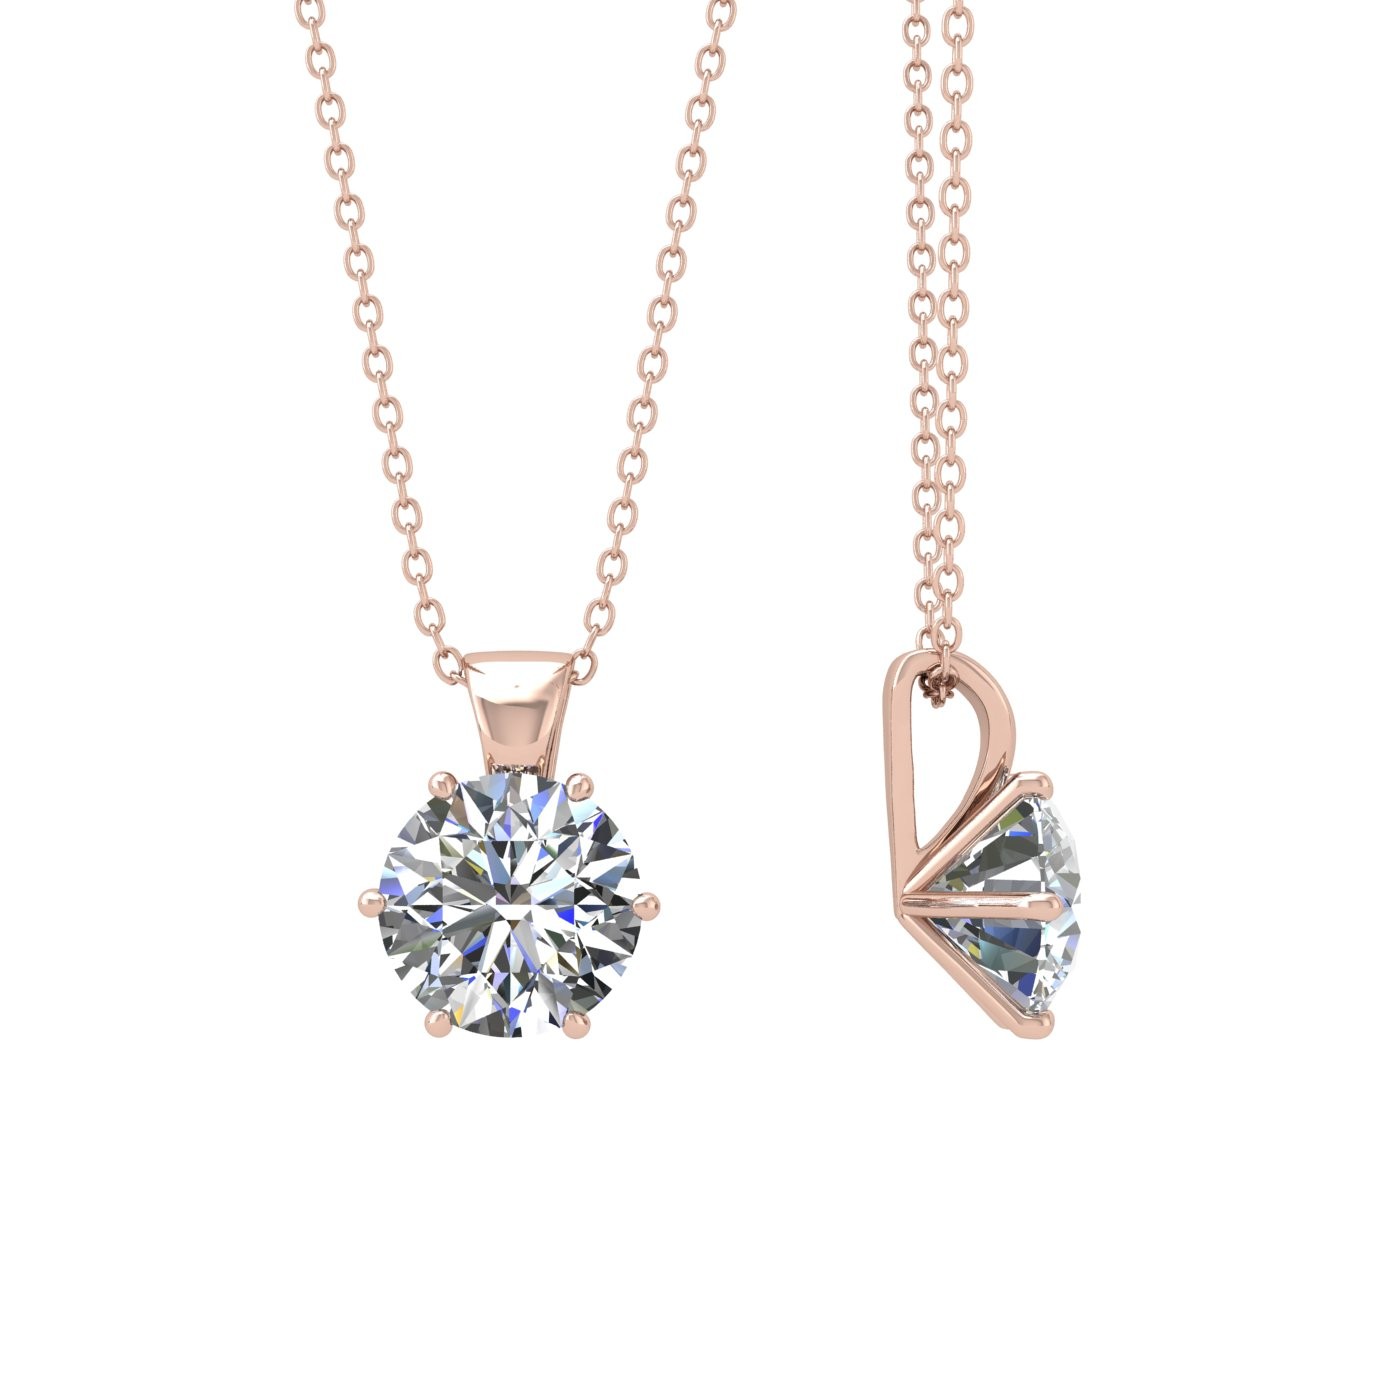 18k rose gold 1.2 ct 6 prongs round shape diamond pendant